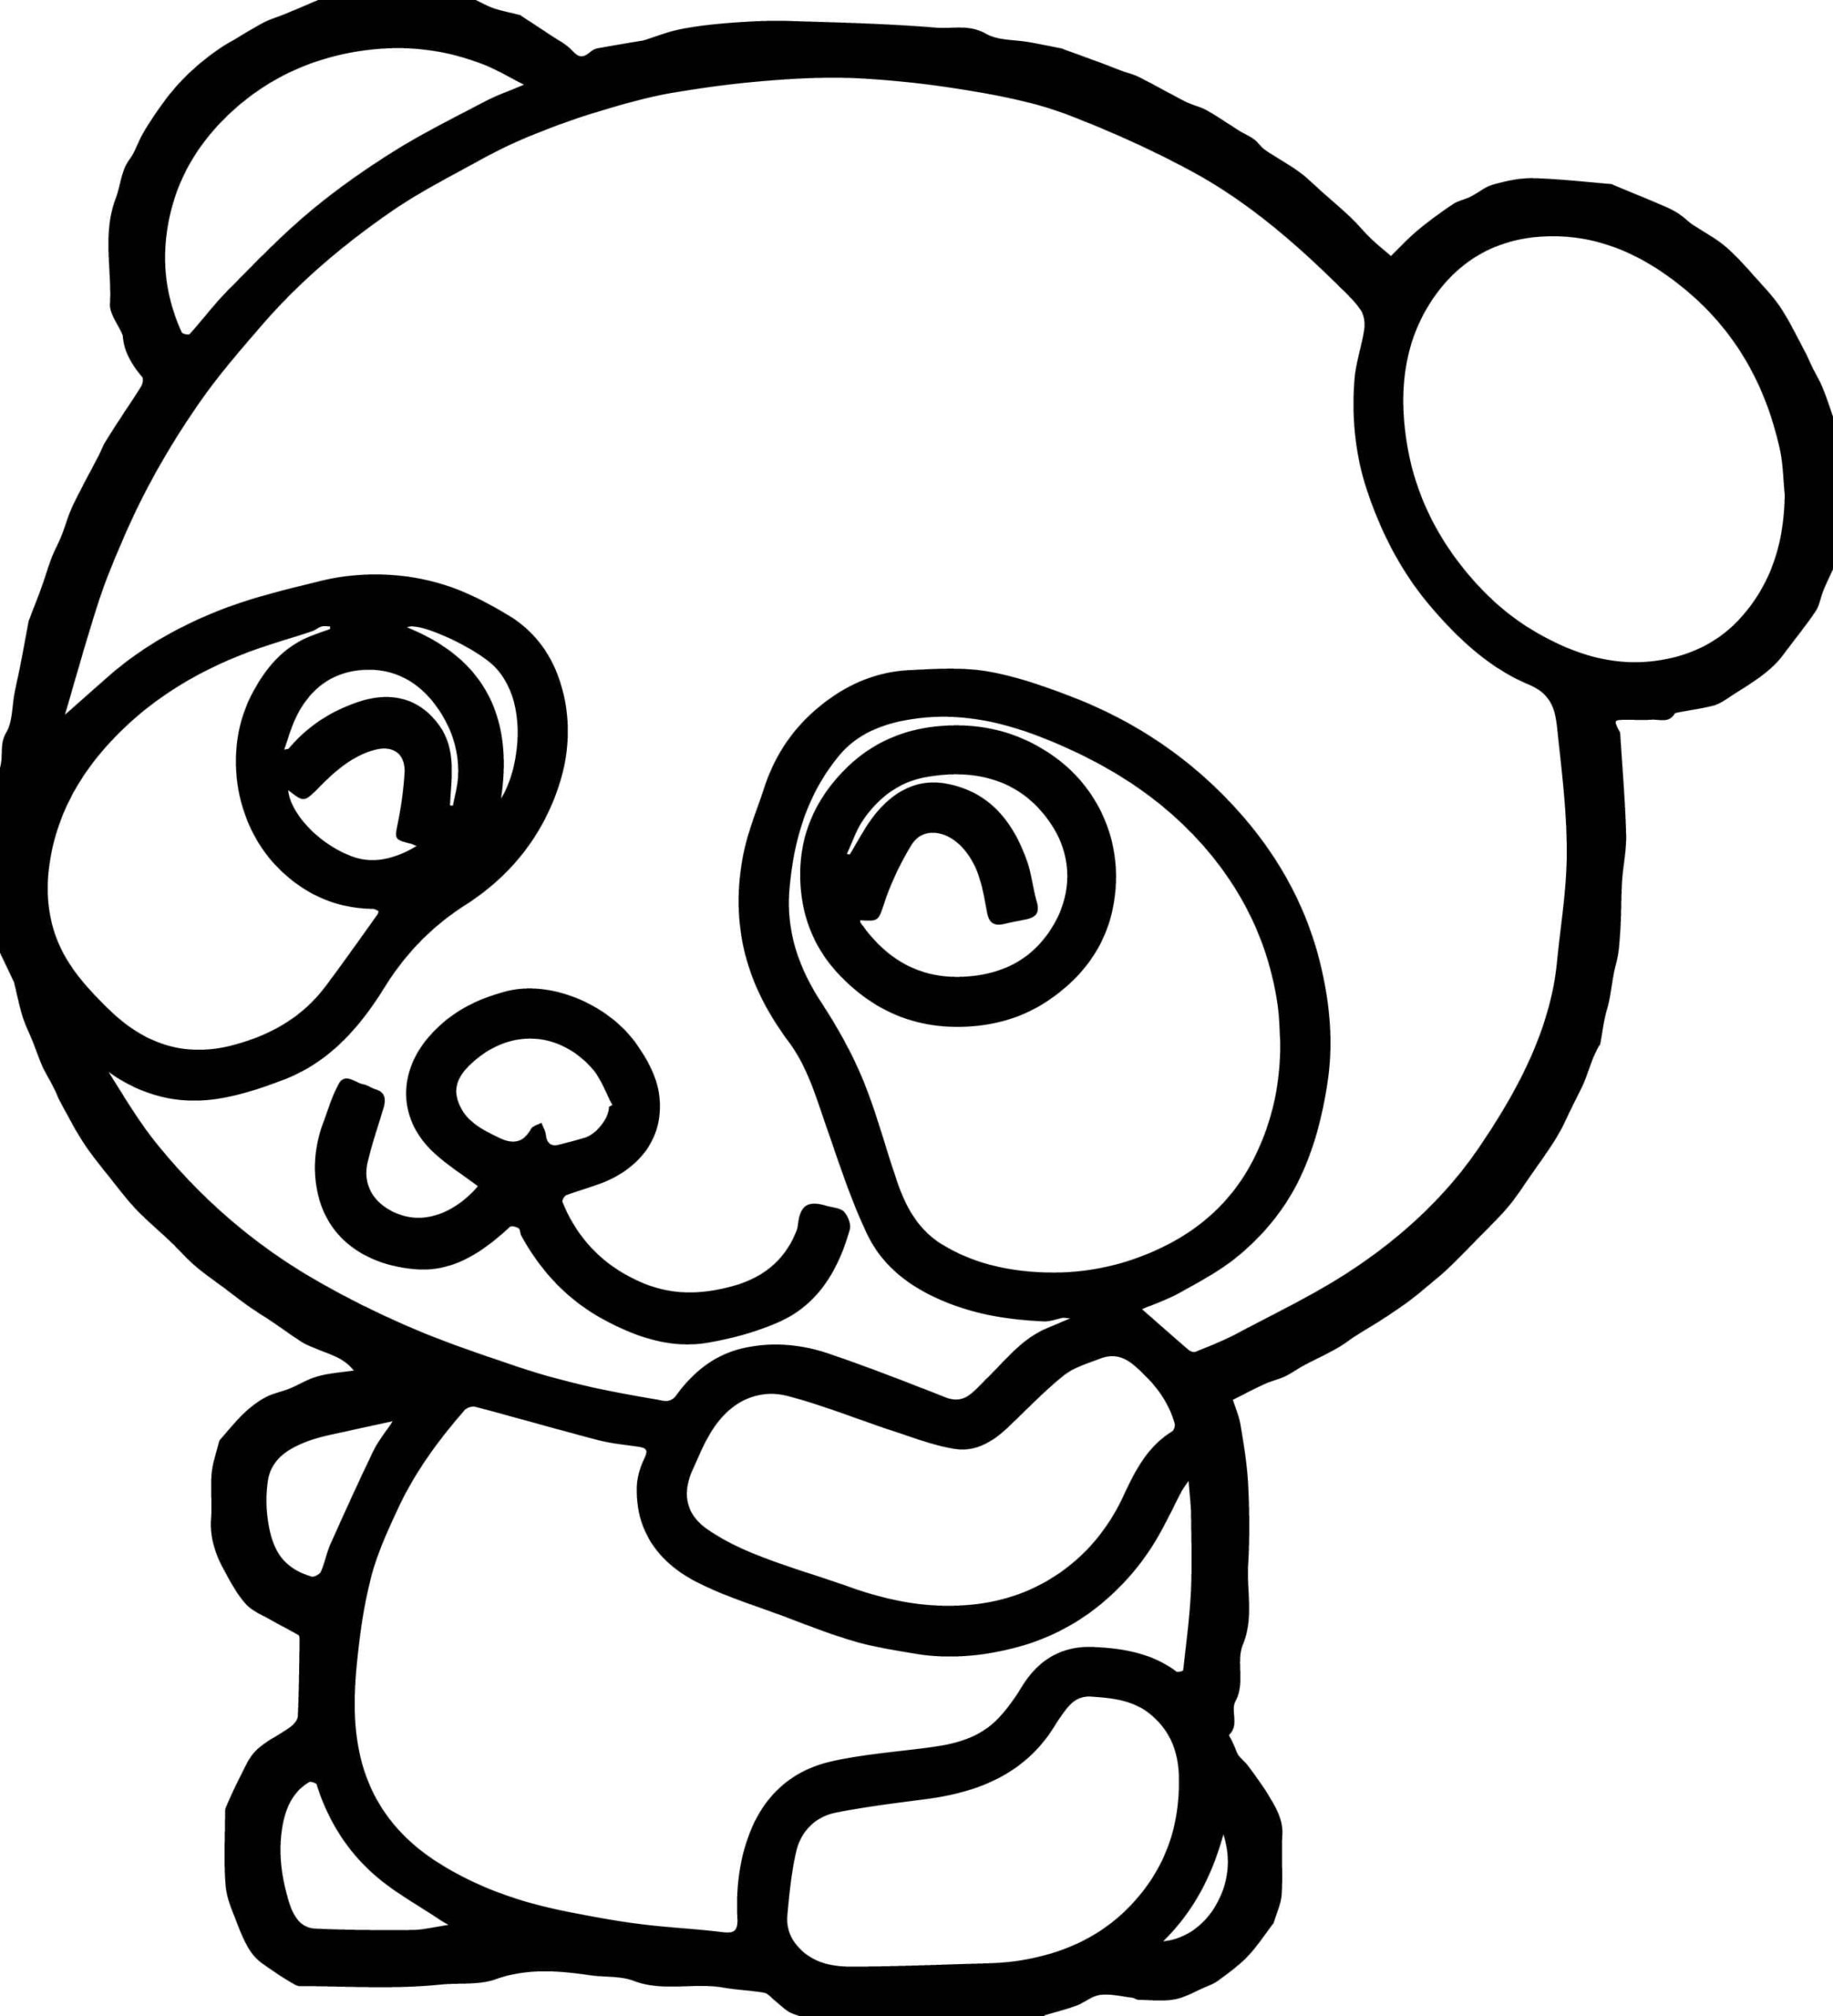 Invitation of a little panda coloring